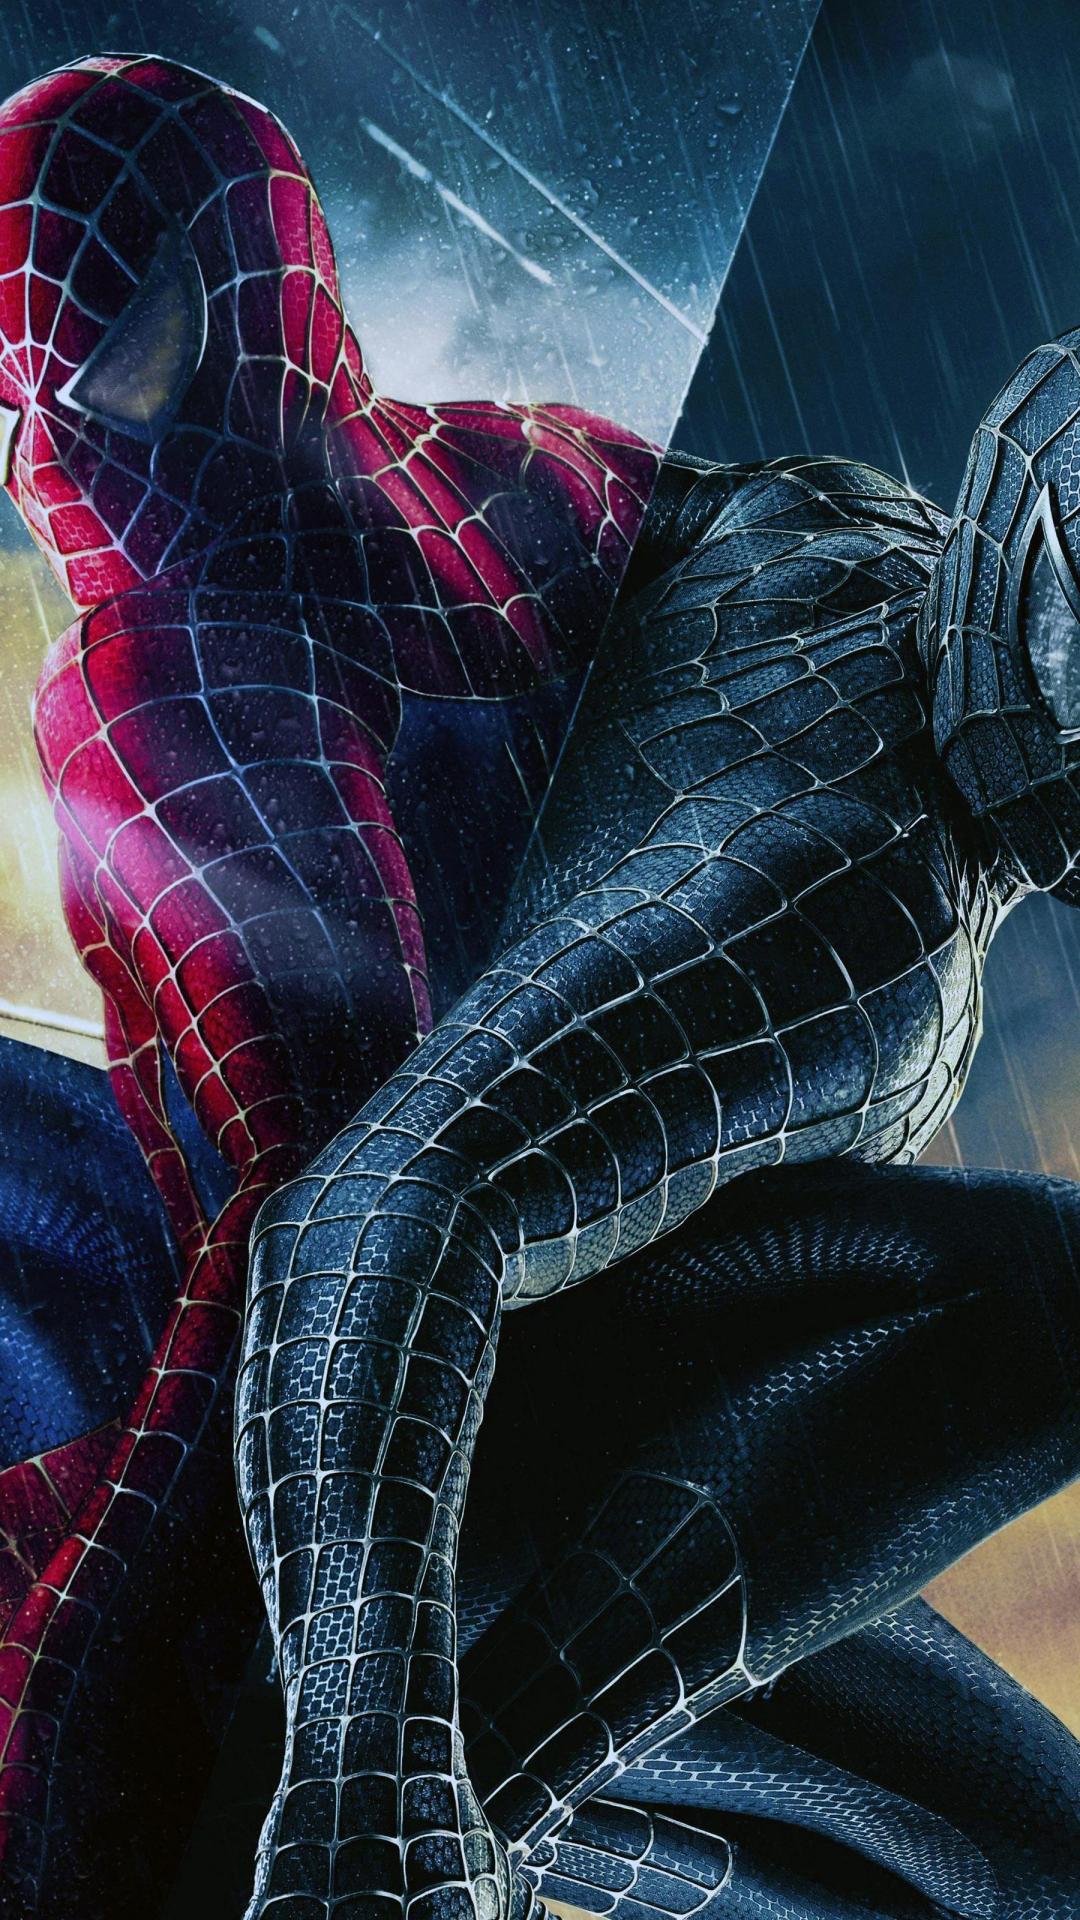 Spiderman 4 wallpaper for Samsung Galaxy s4, s5 – WallpapersIQ